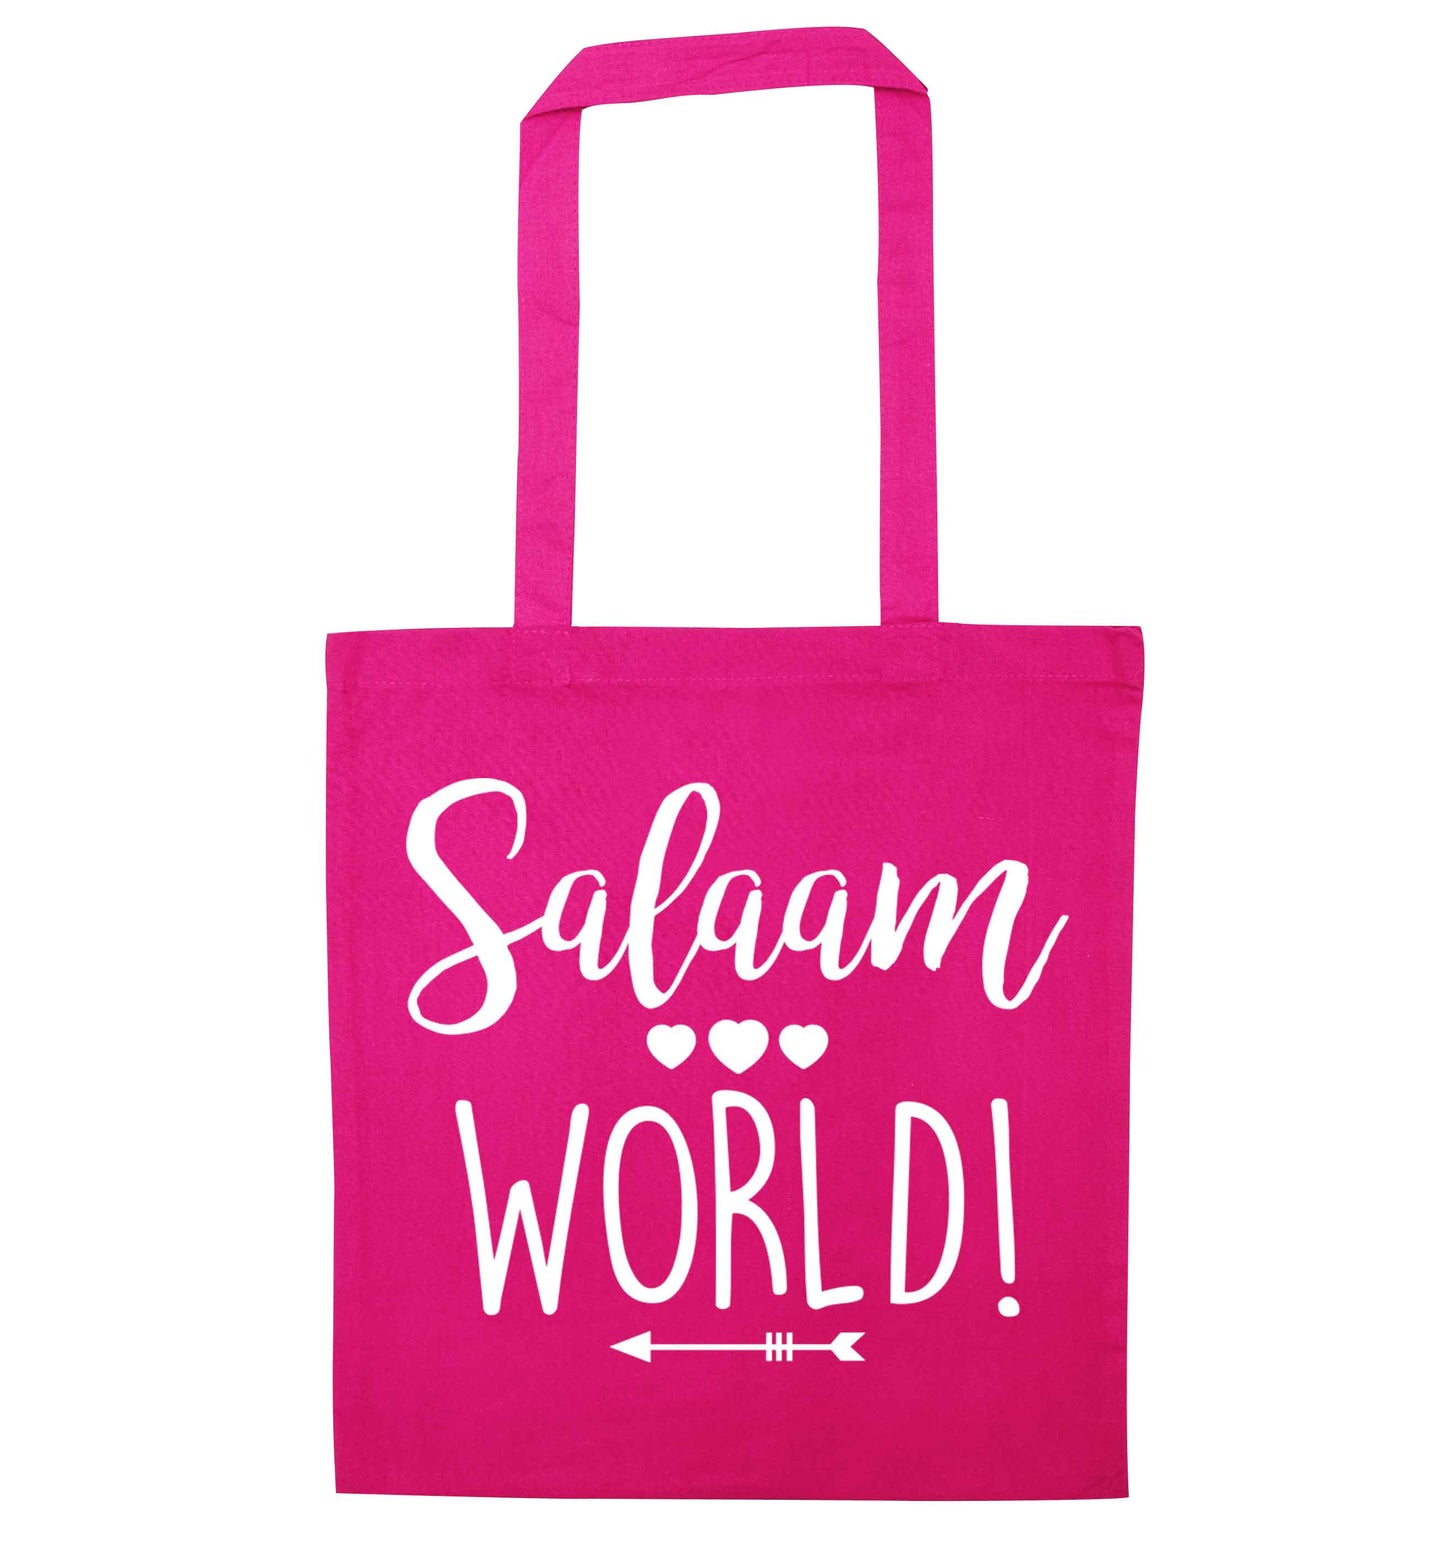 Salaam world pink tote bag